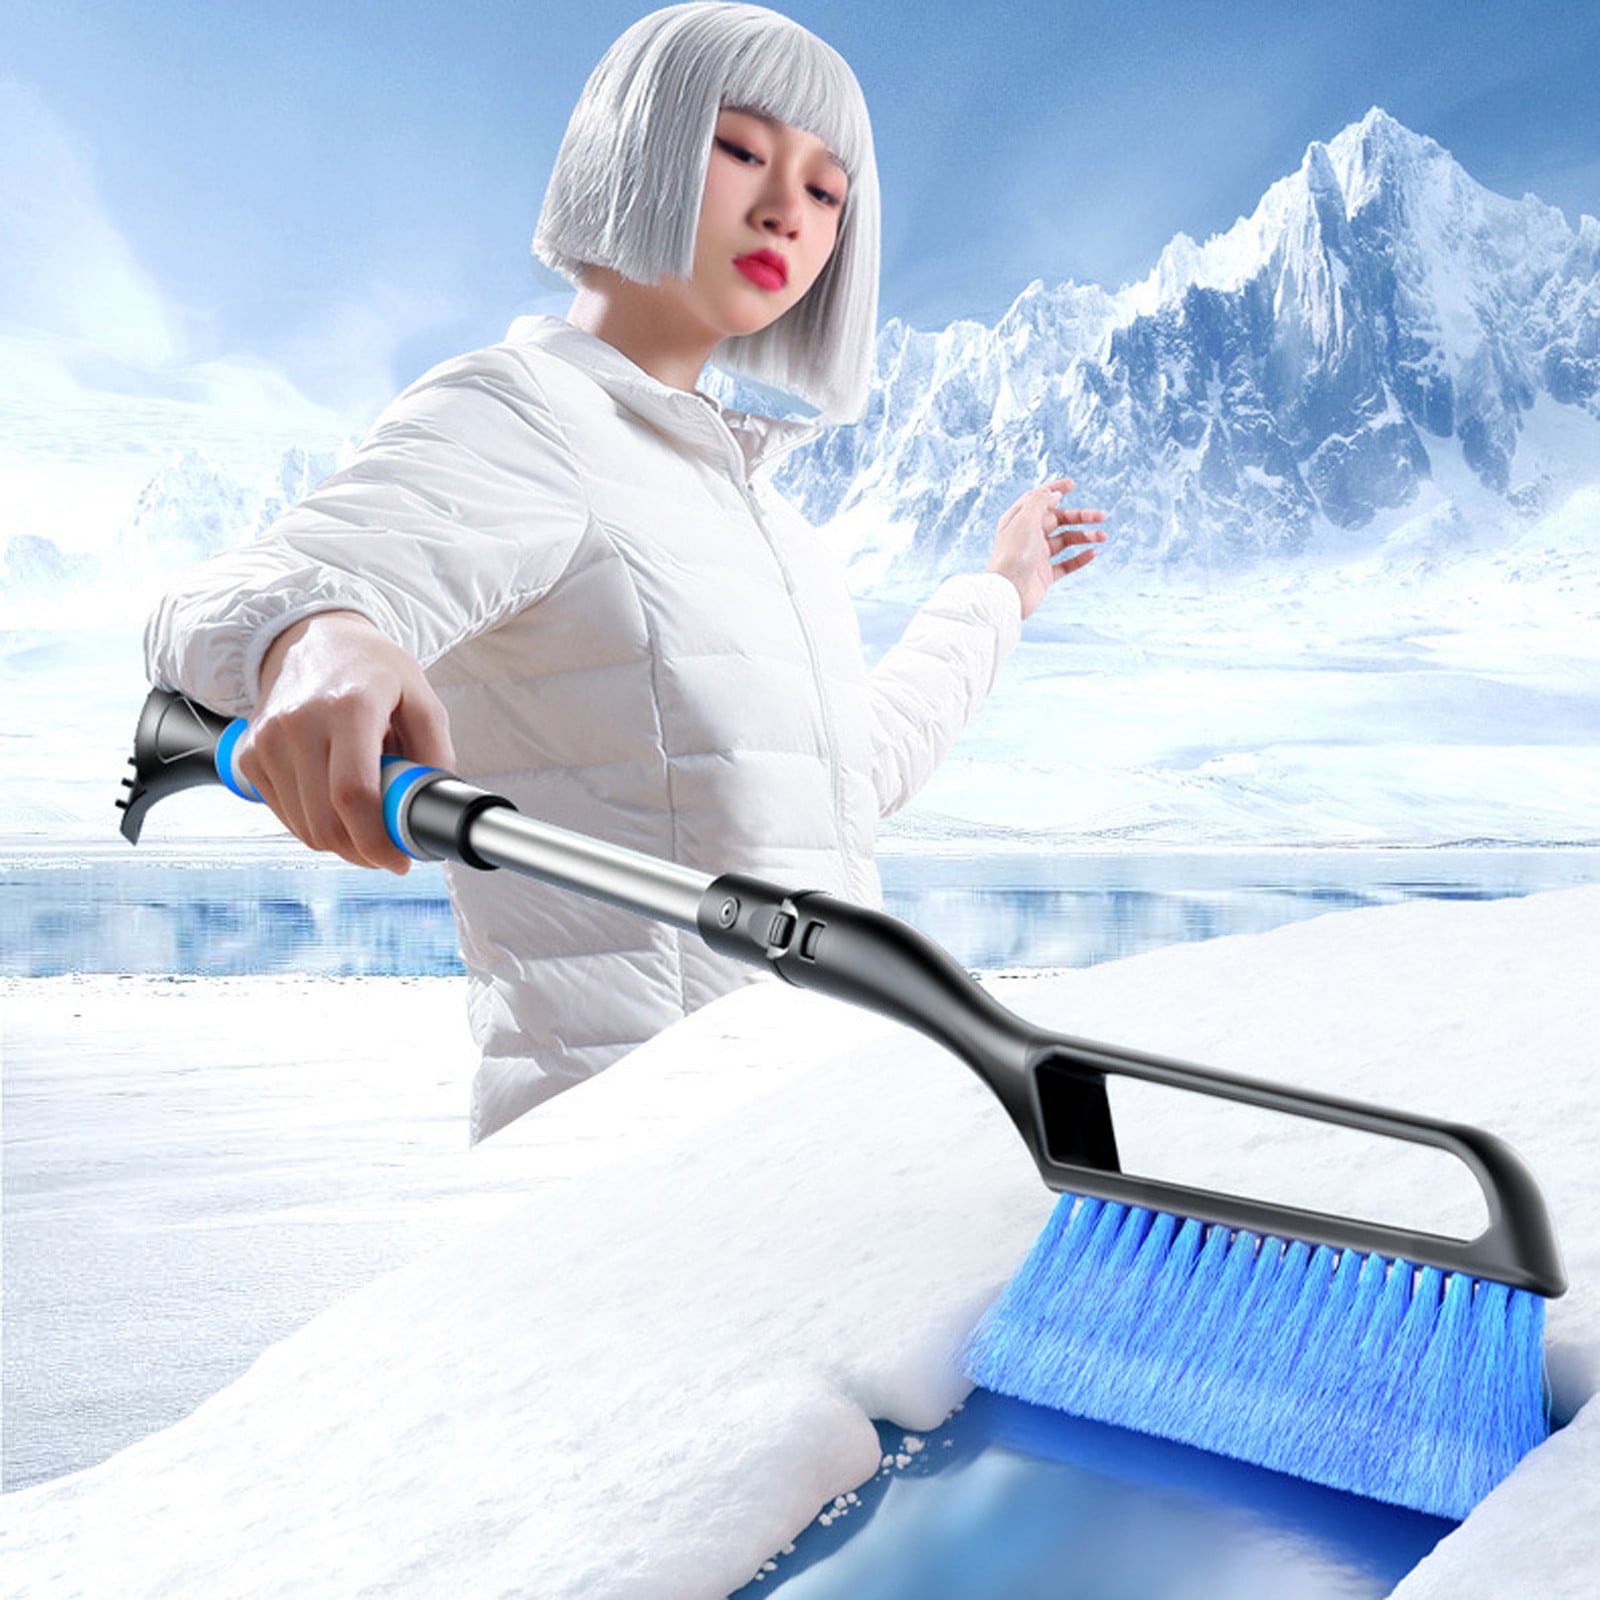 Vikakiooze 2023 Promotion on sale, Snow Brush & Ice Scraper For Car Or  Truck With Ergonomic Foam Grip, SUV Window & Windshield Tool